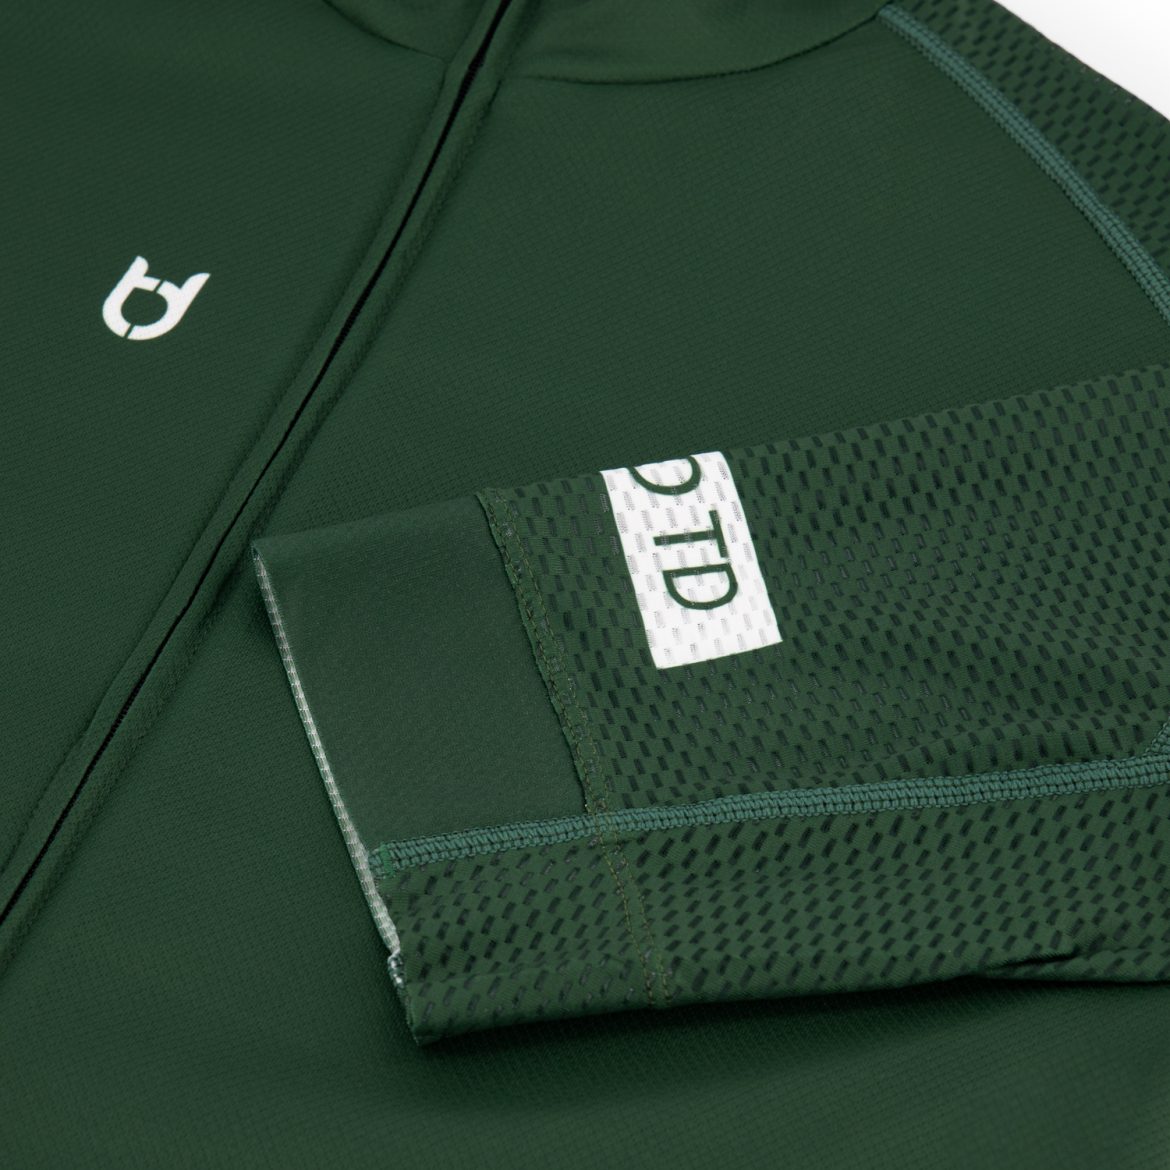 Mesh sleeves detail photo of a dark green racing bike shirt for the summer